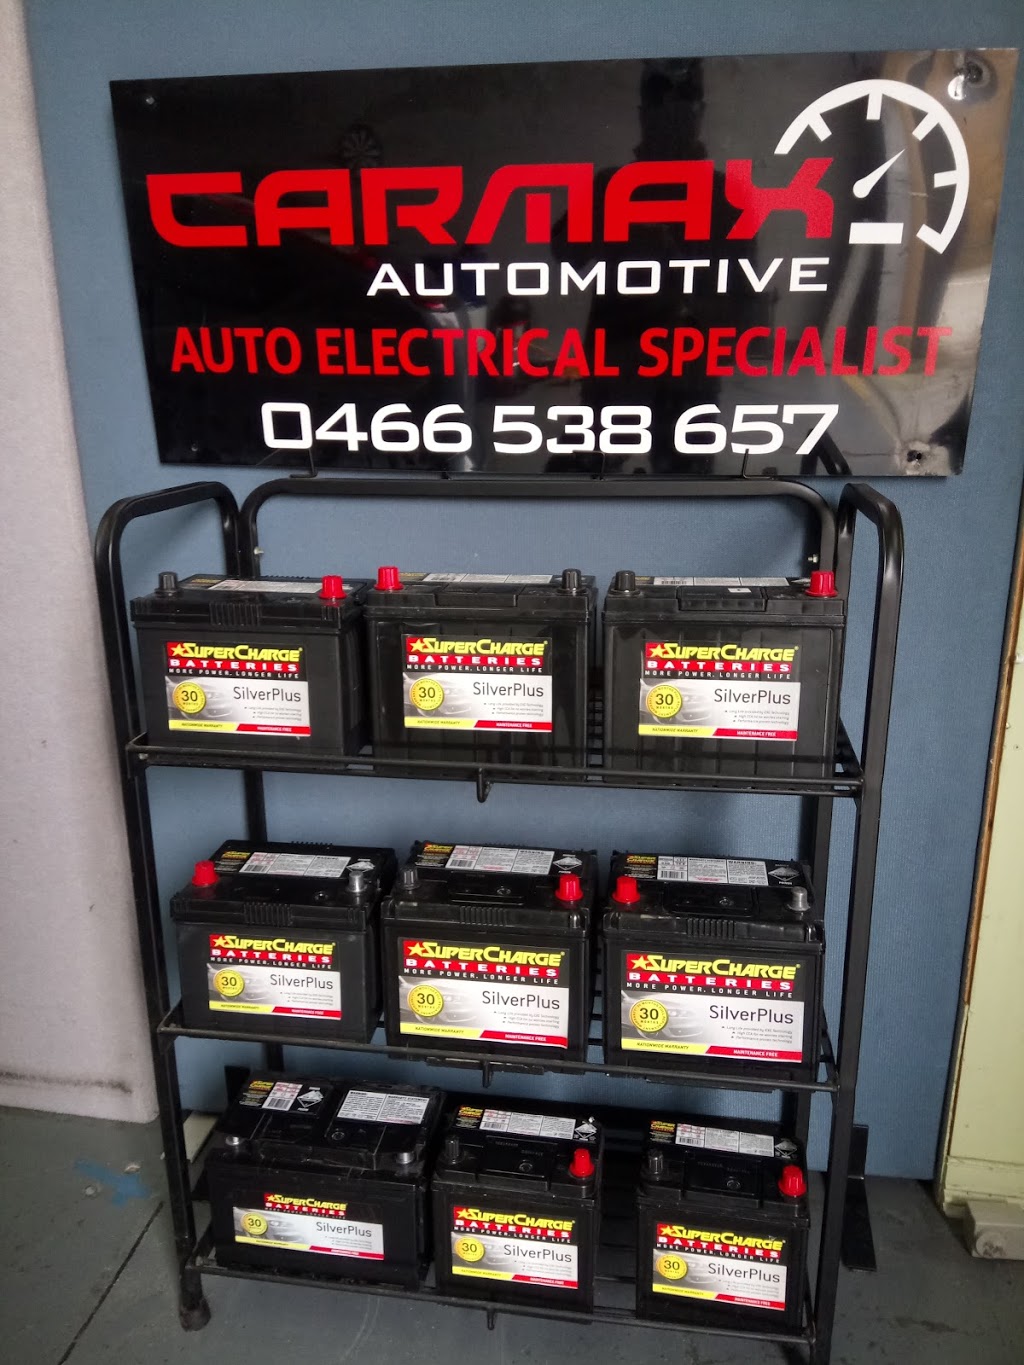 Carmax Automotive | car repair | Factory 12/6-7 Motto Ct, Hoppers Crossing VIC 3029, Australia | 0466538657 OR +61 466 538 657